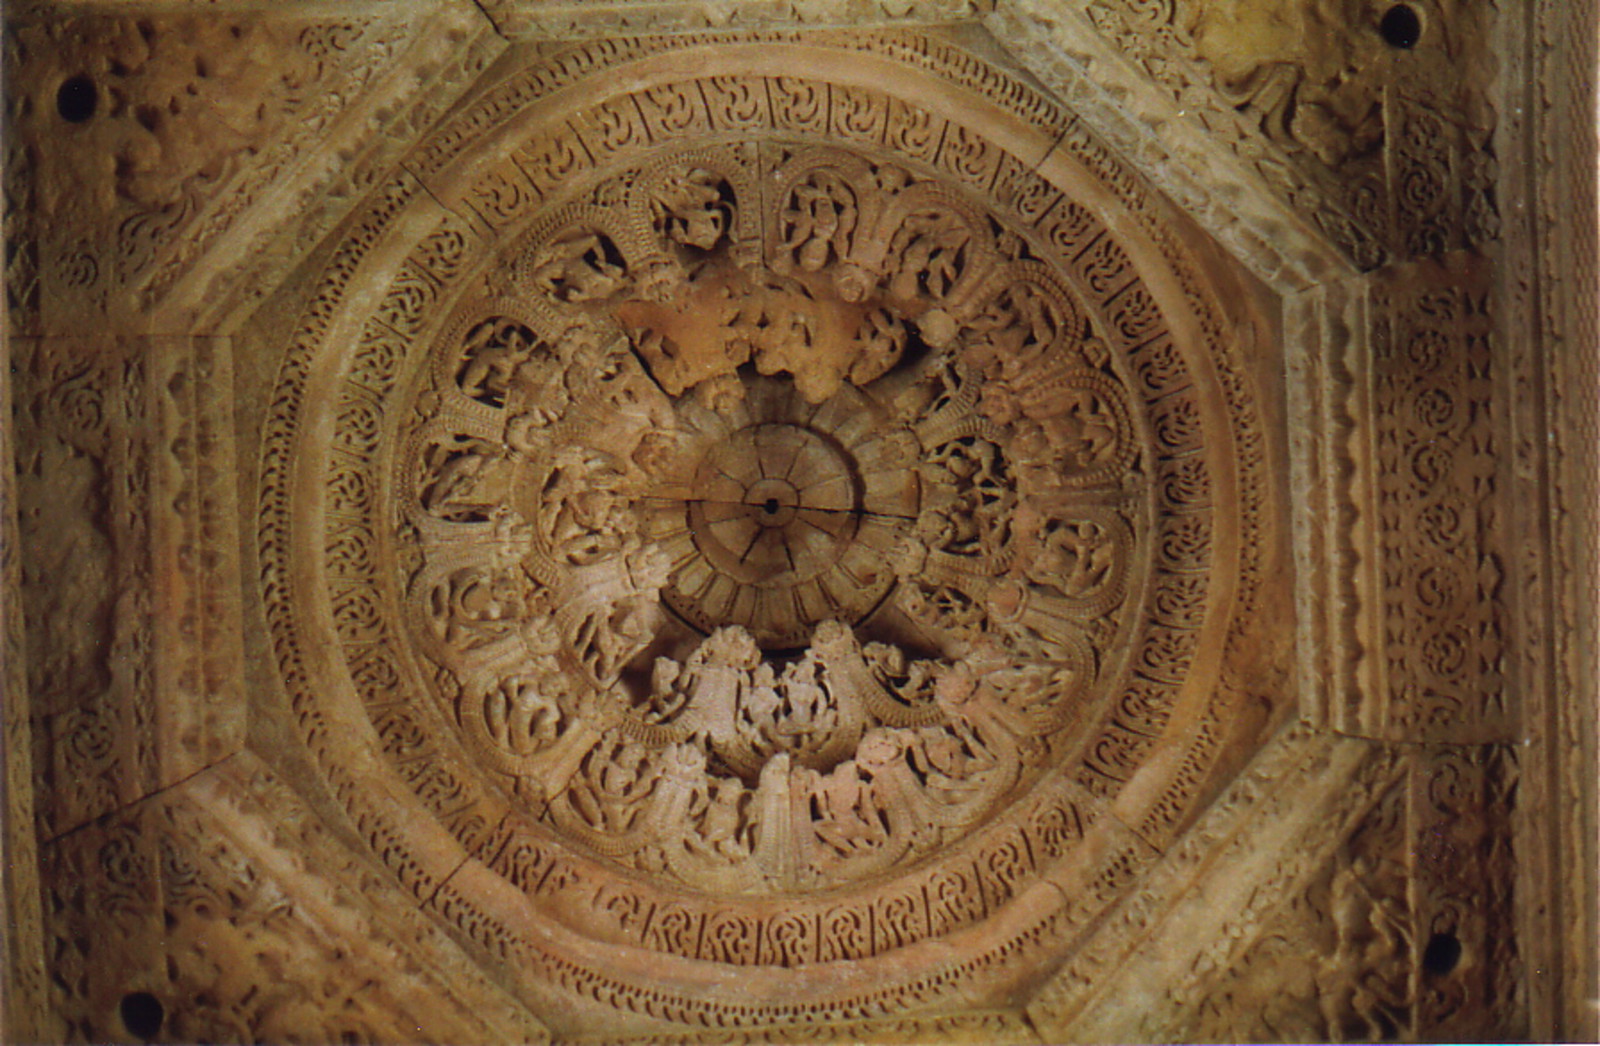 Intricate roof carvings in the Hindu Sasbahu Temples